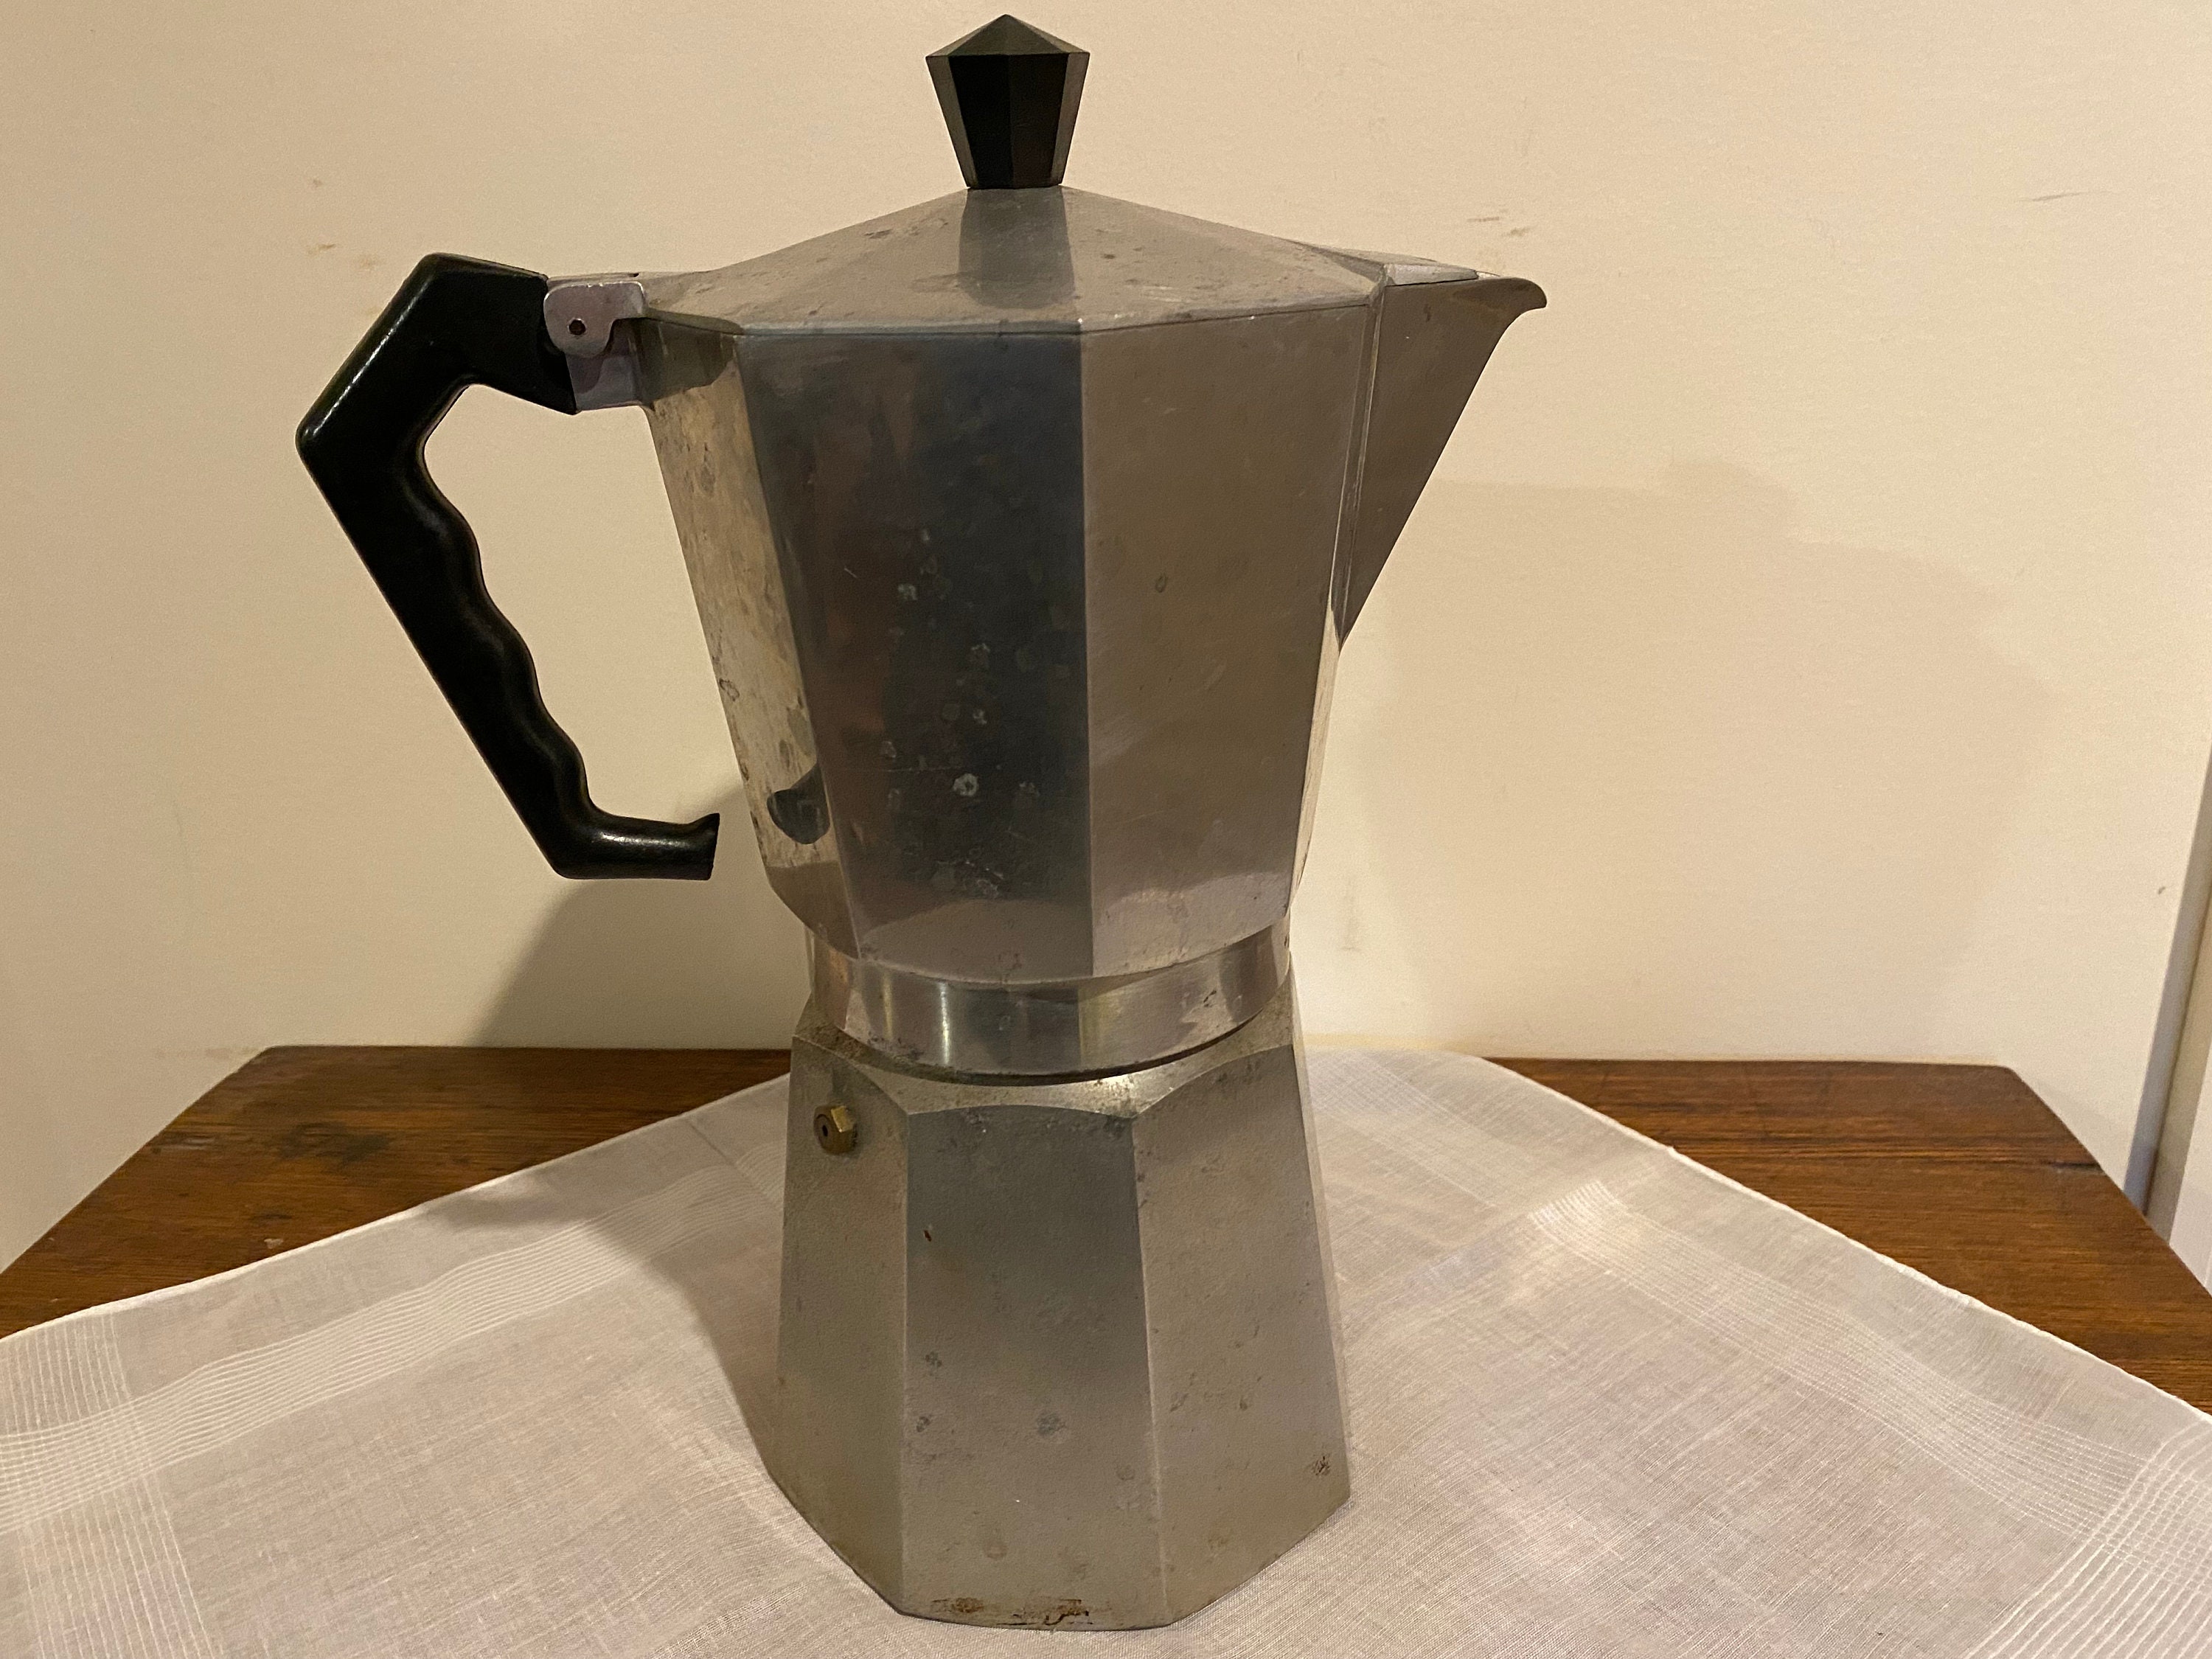 XXL Vintage Stovetop Moka Pot With Ceramic Top, Italian Espresso Maker,  About 12 Cups Coffee Pot, 1960 